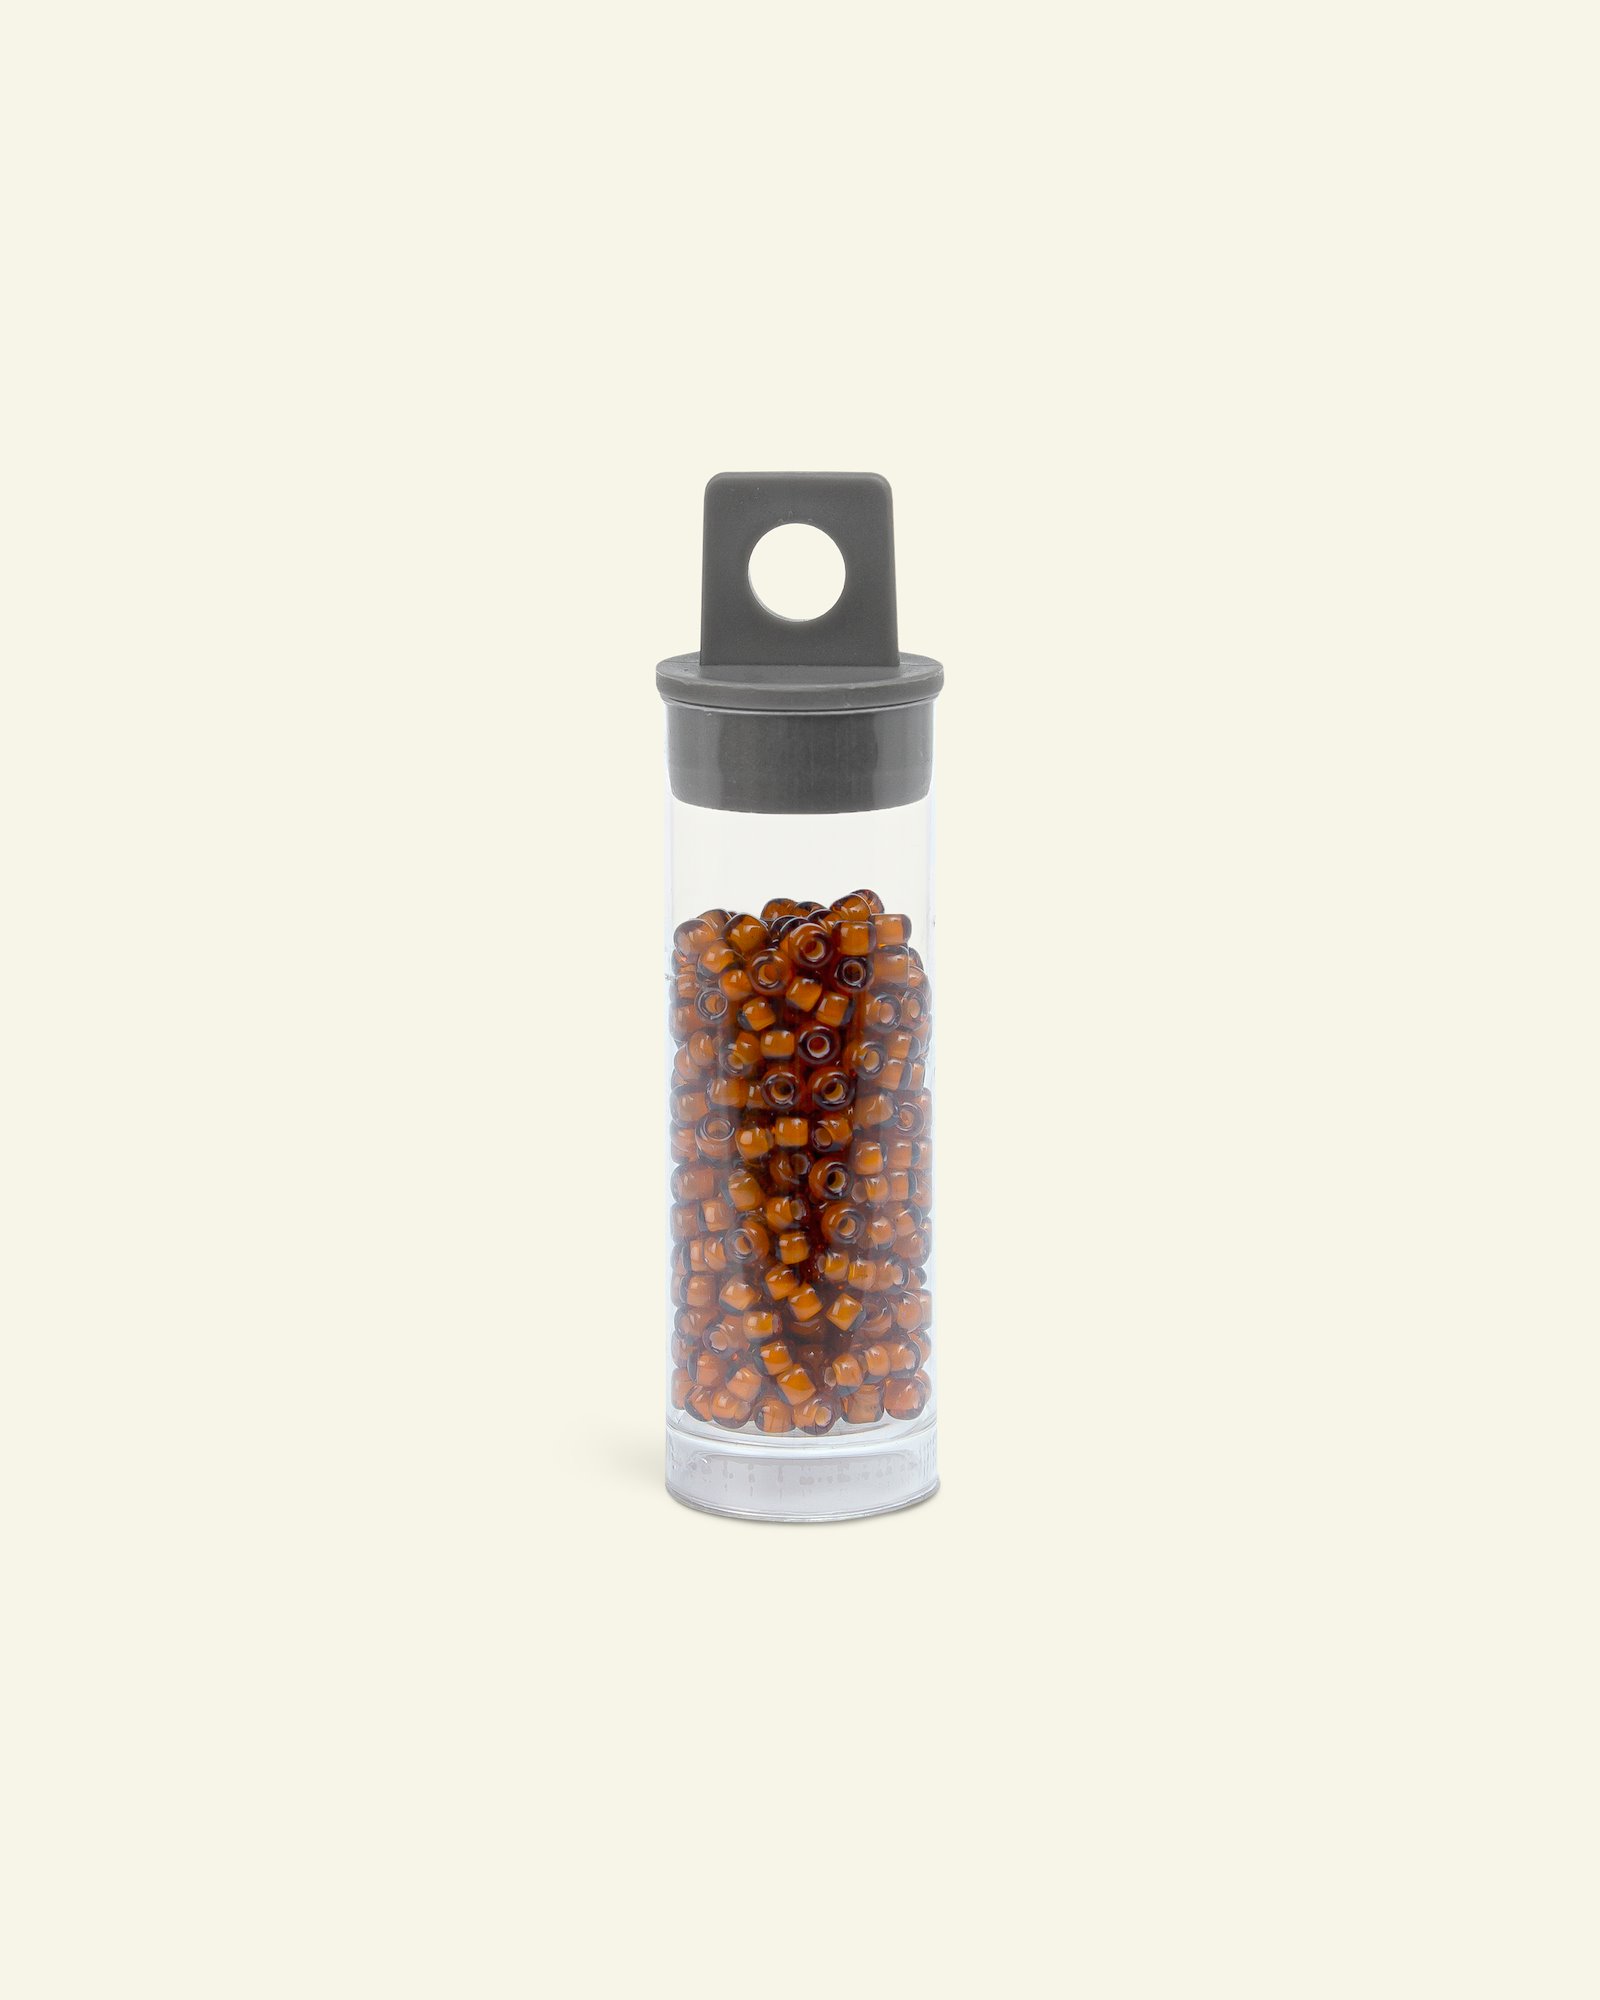 Matsuno glass bead 8/0 caramel 10g 47121_pack